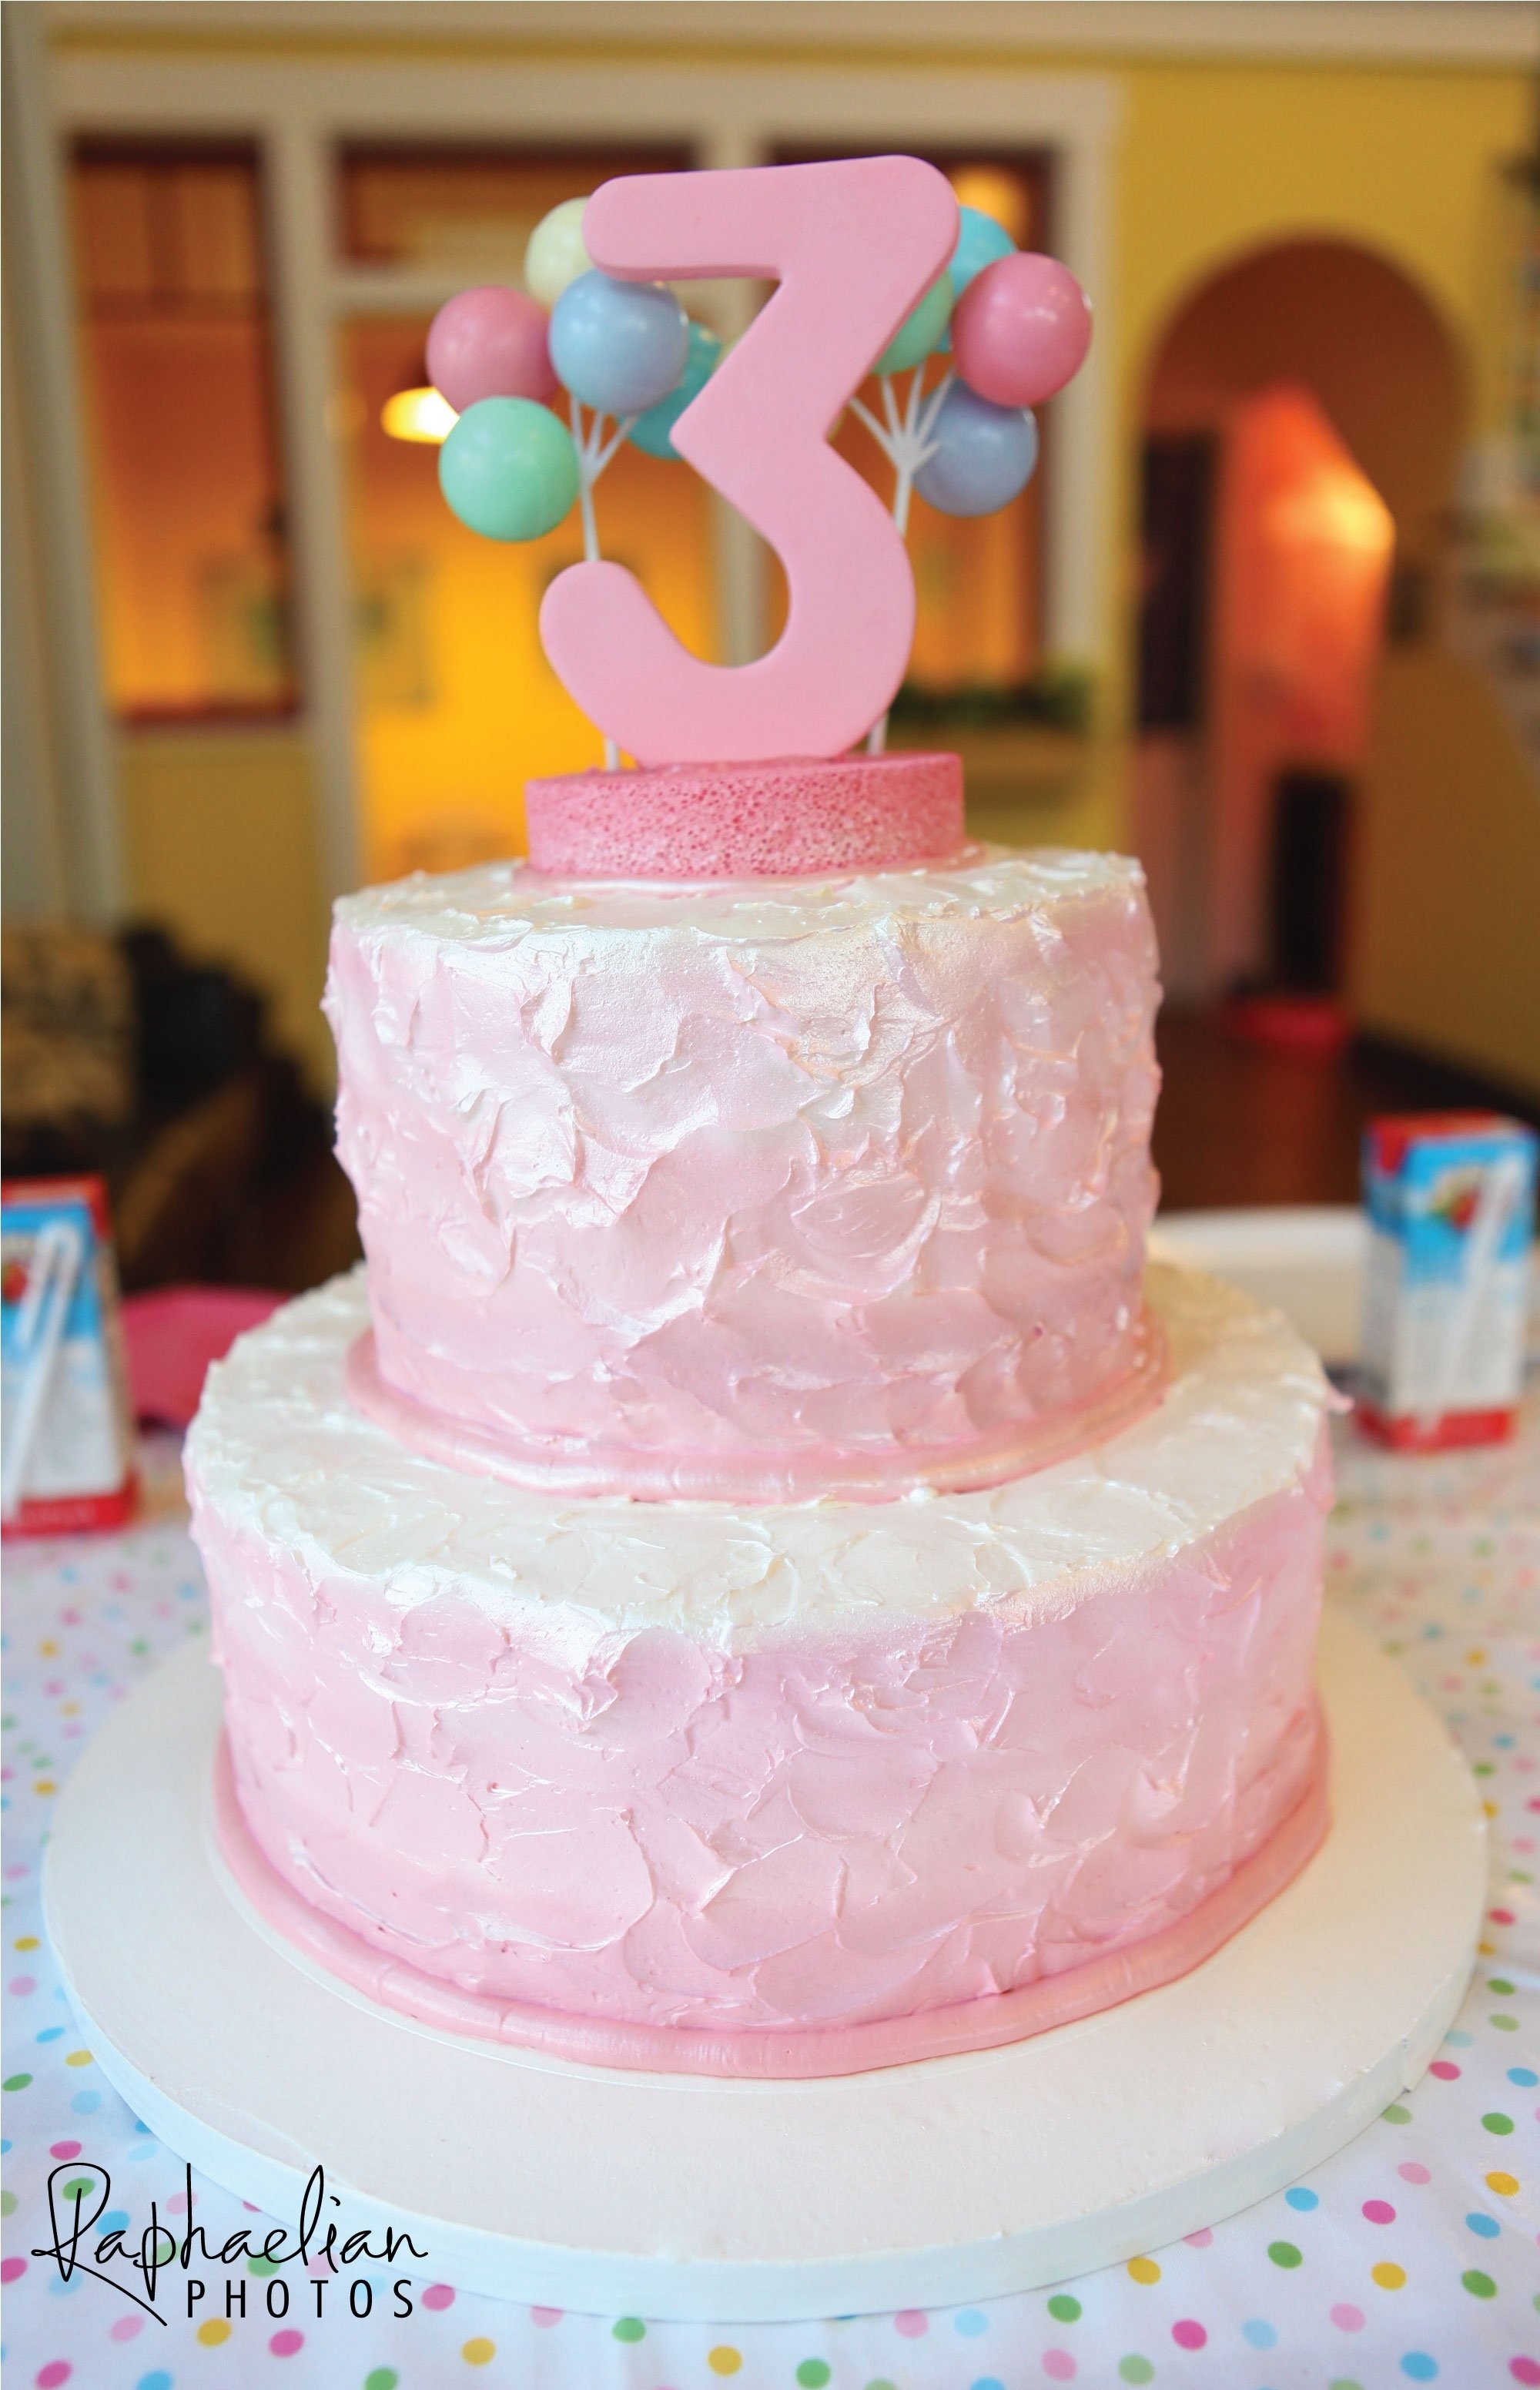 10 Fabulous 3 Year Old Girl Birthday Ideas 3 year old birthday cake for a girl raphaelian photos pinterest 2022